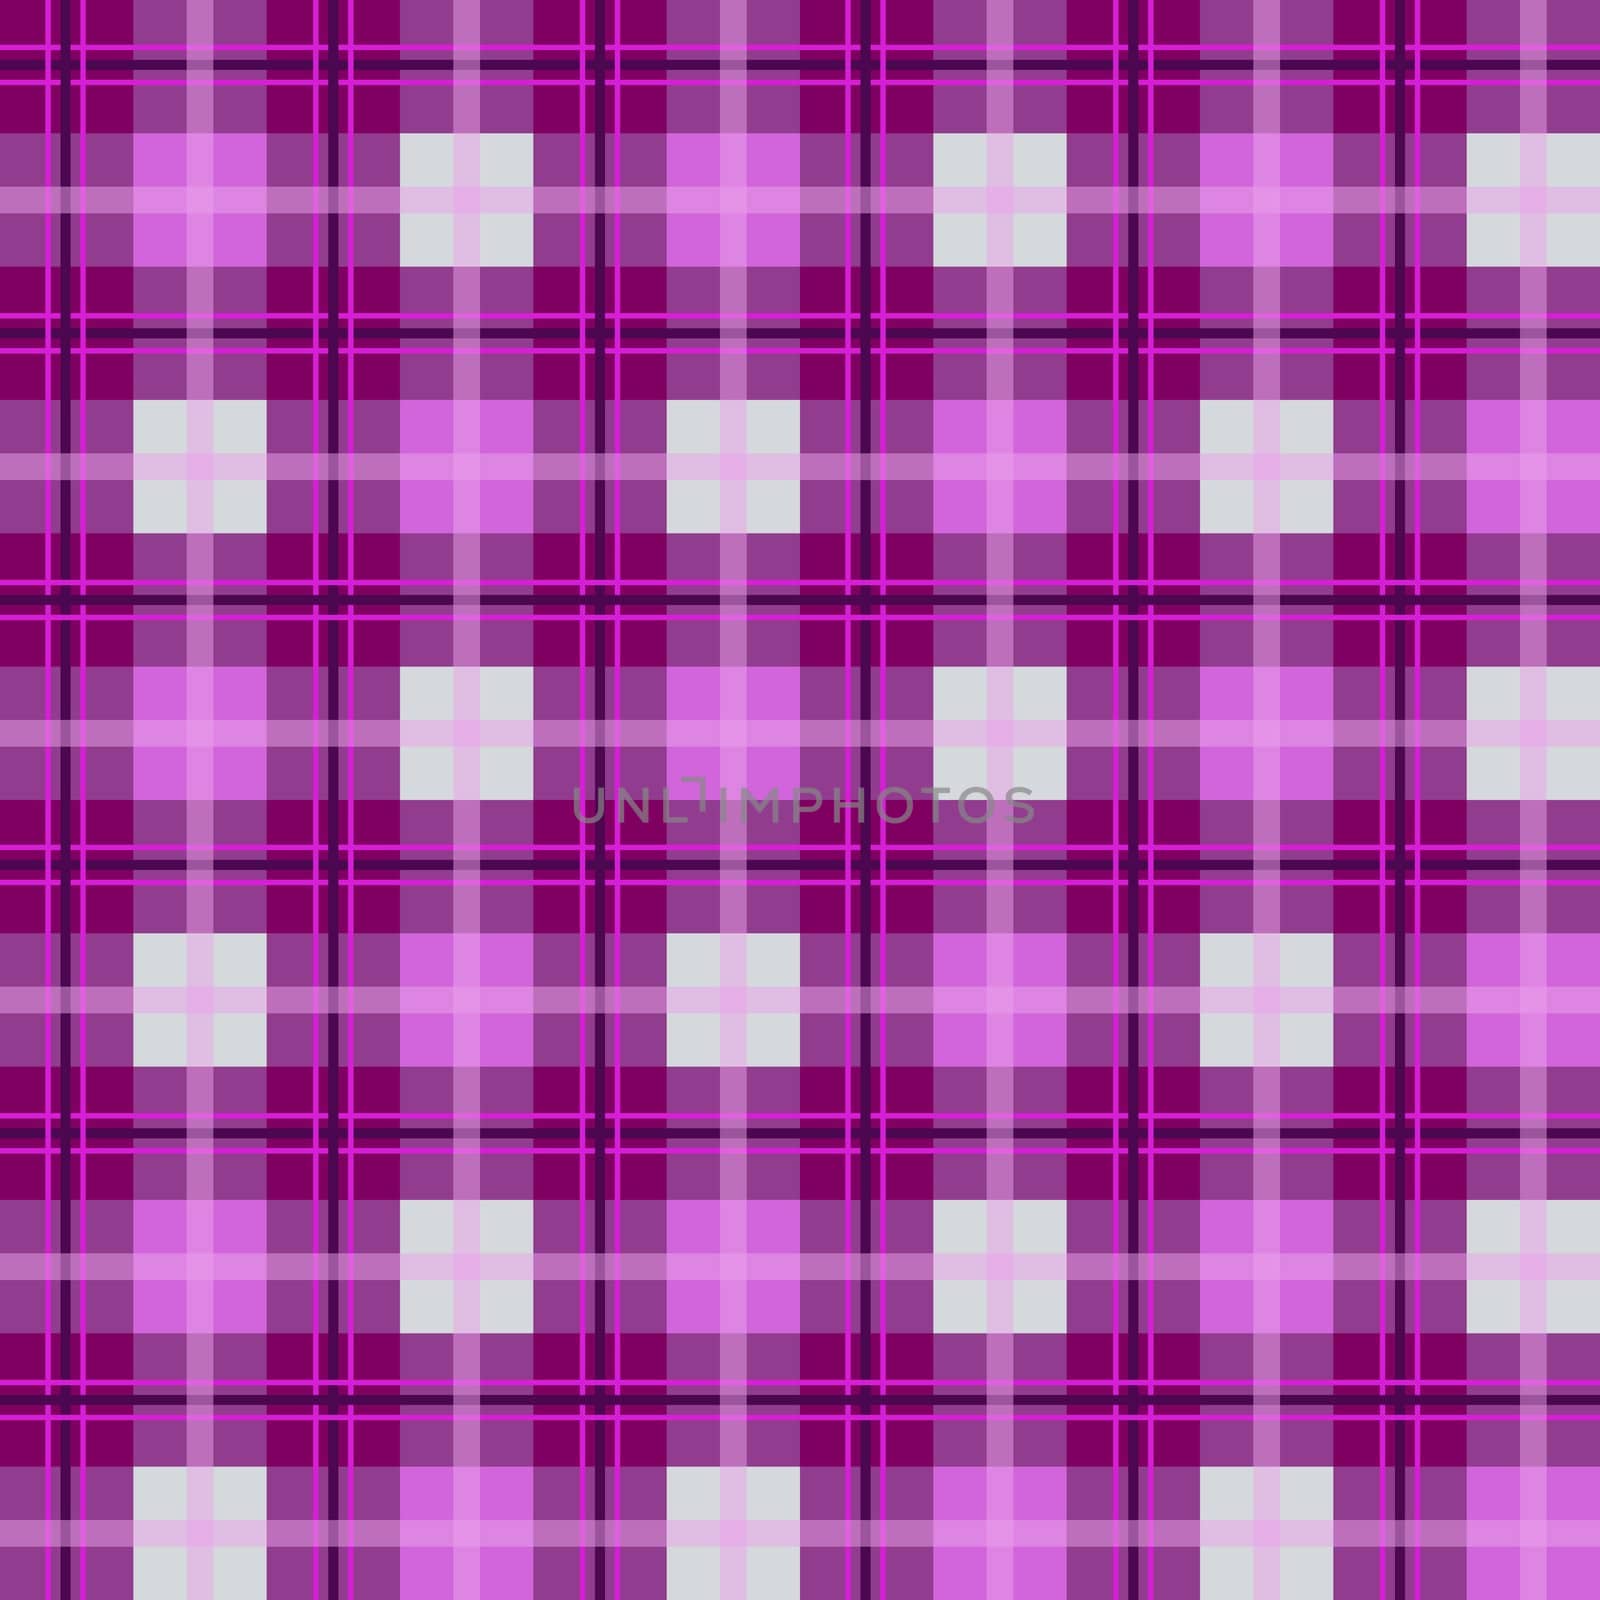 stylish purple abstract mesh extended, art illustration